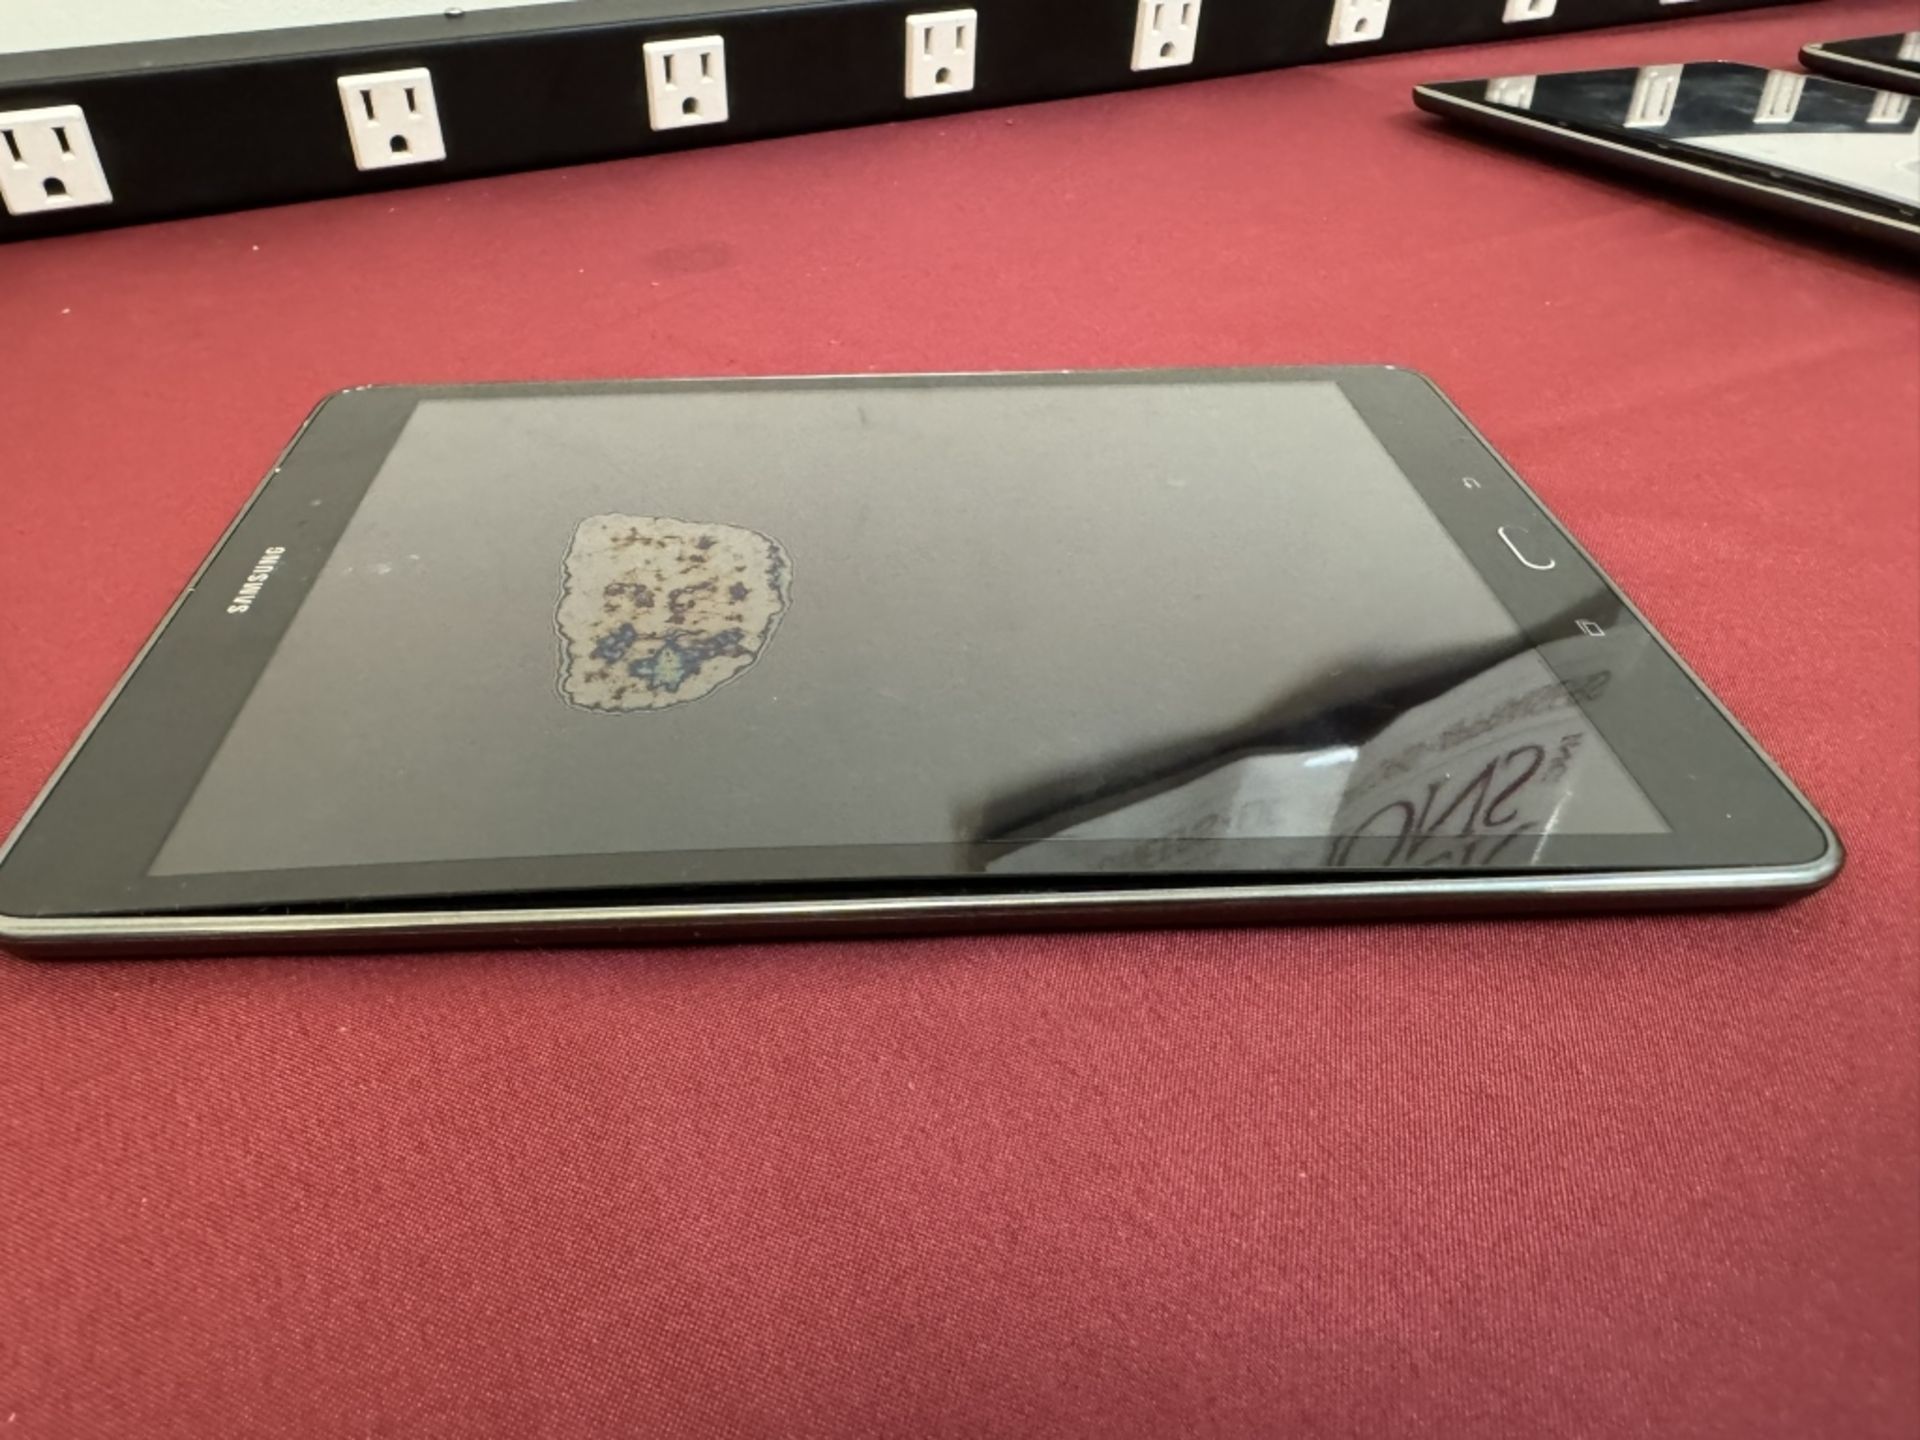 Samsung Galaxy Tab A7 10.4 (2020) SM-T500 - Image 6 of 8